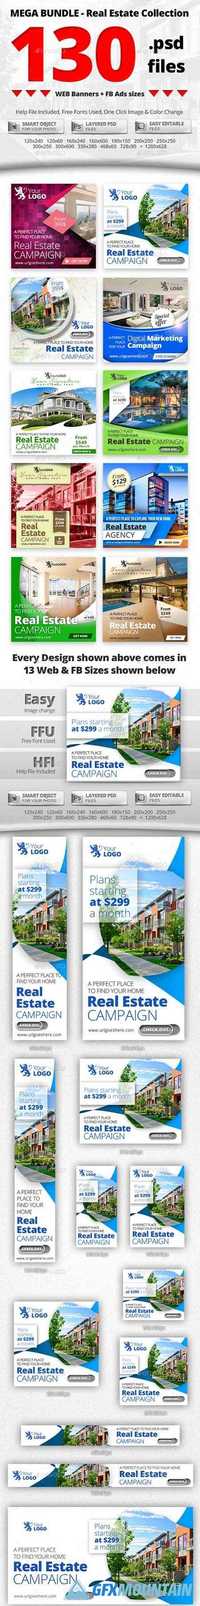 10 in 1 Real Estate Web & FB Banners - MEGA Bundle 3 19578686